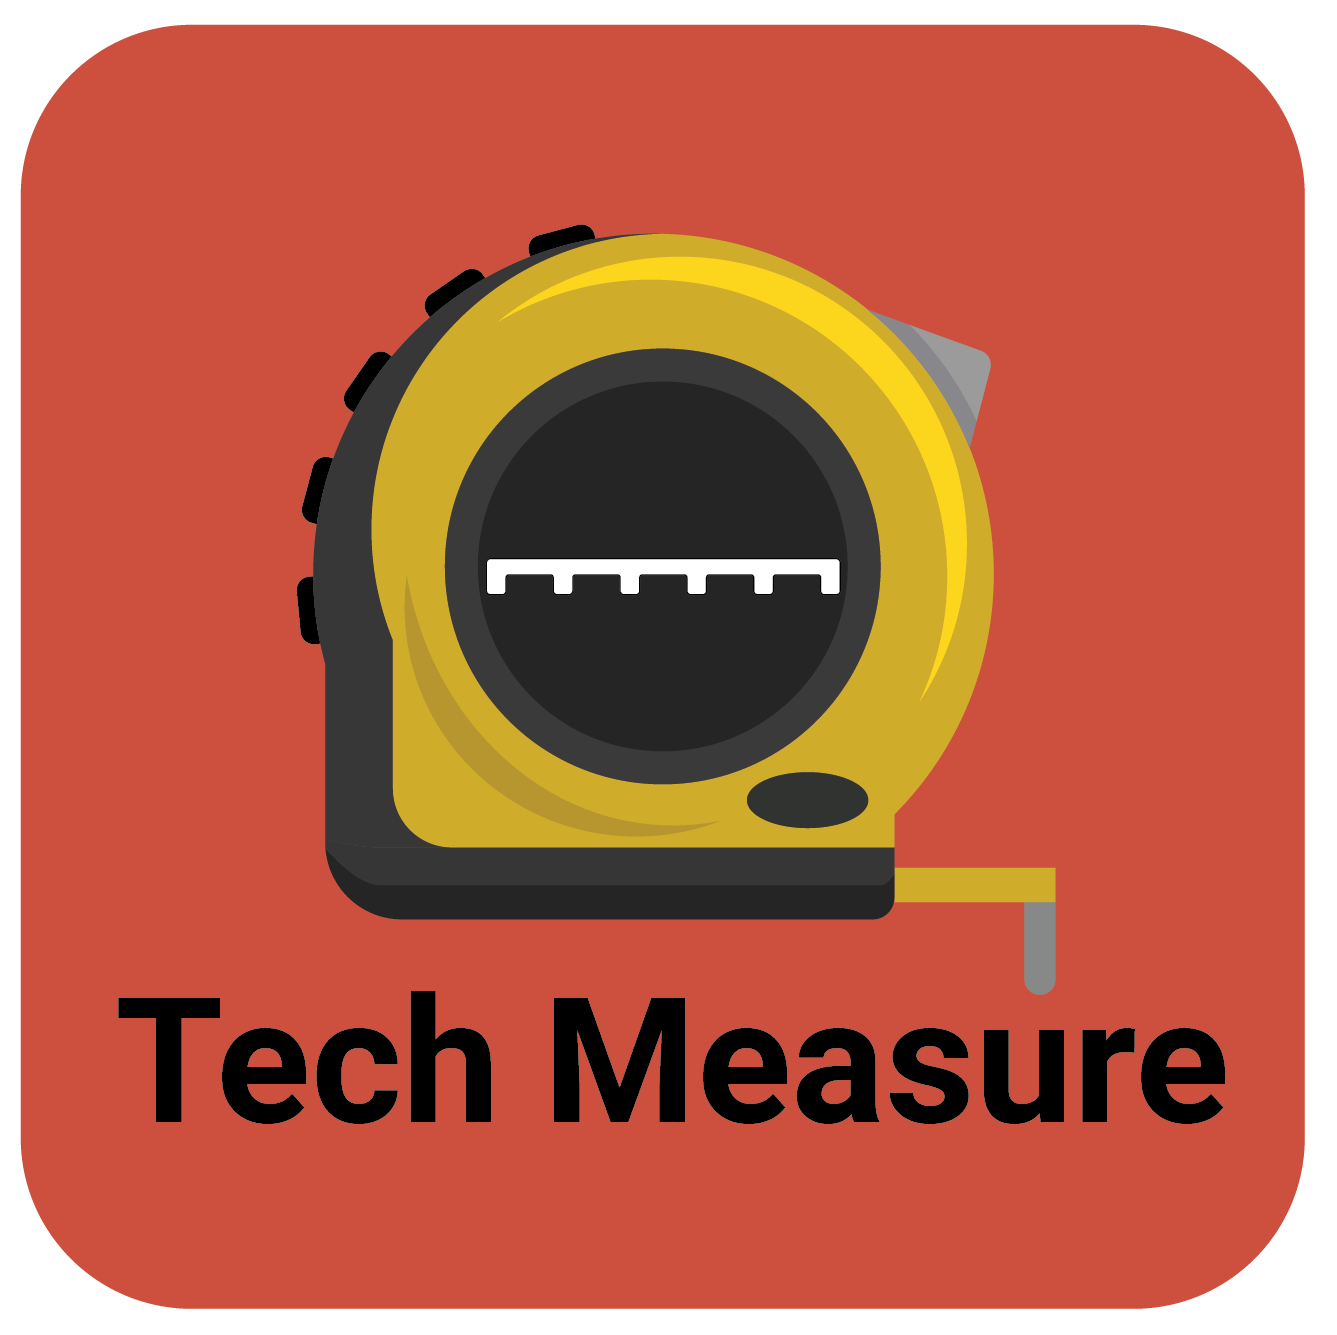 Tech Measure